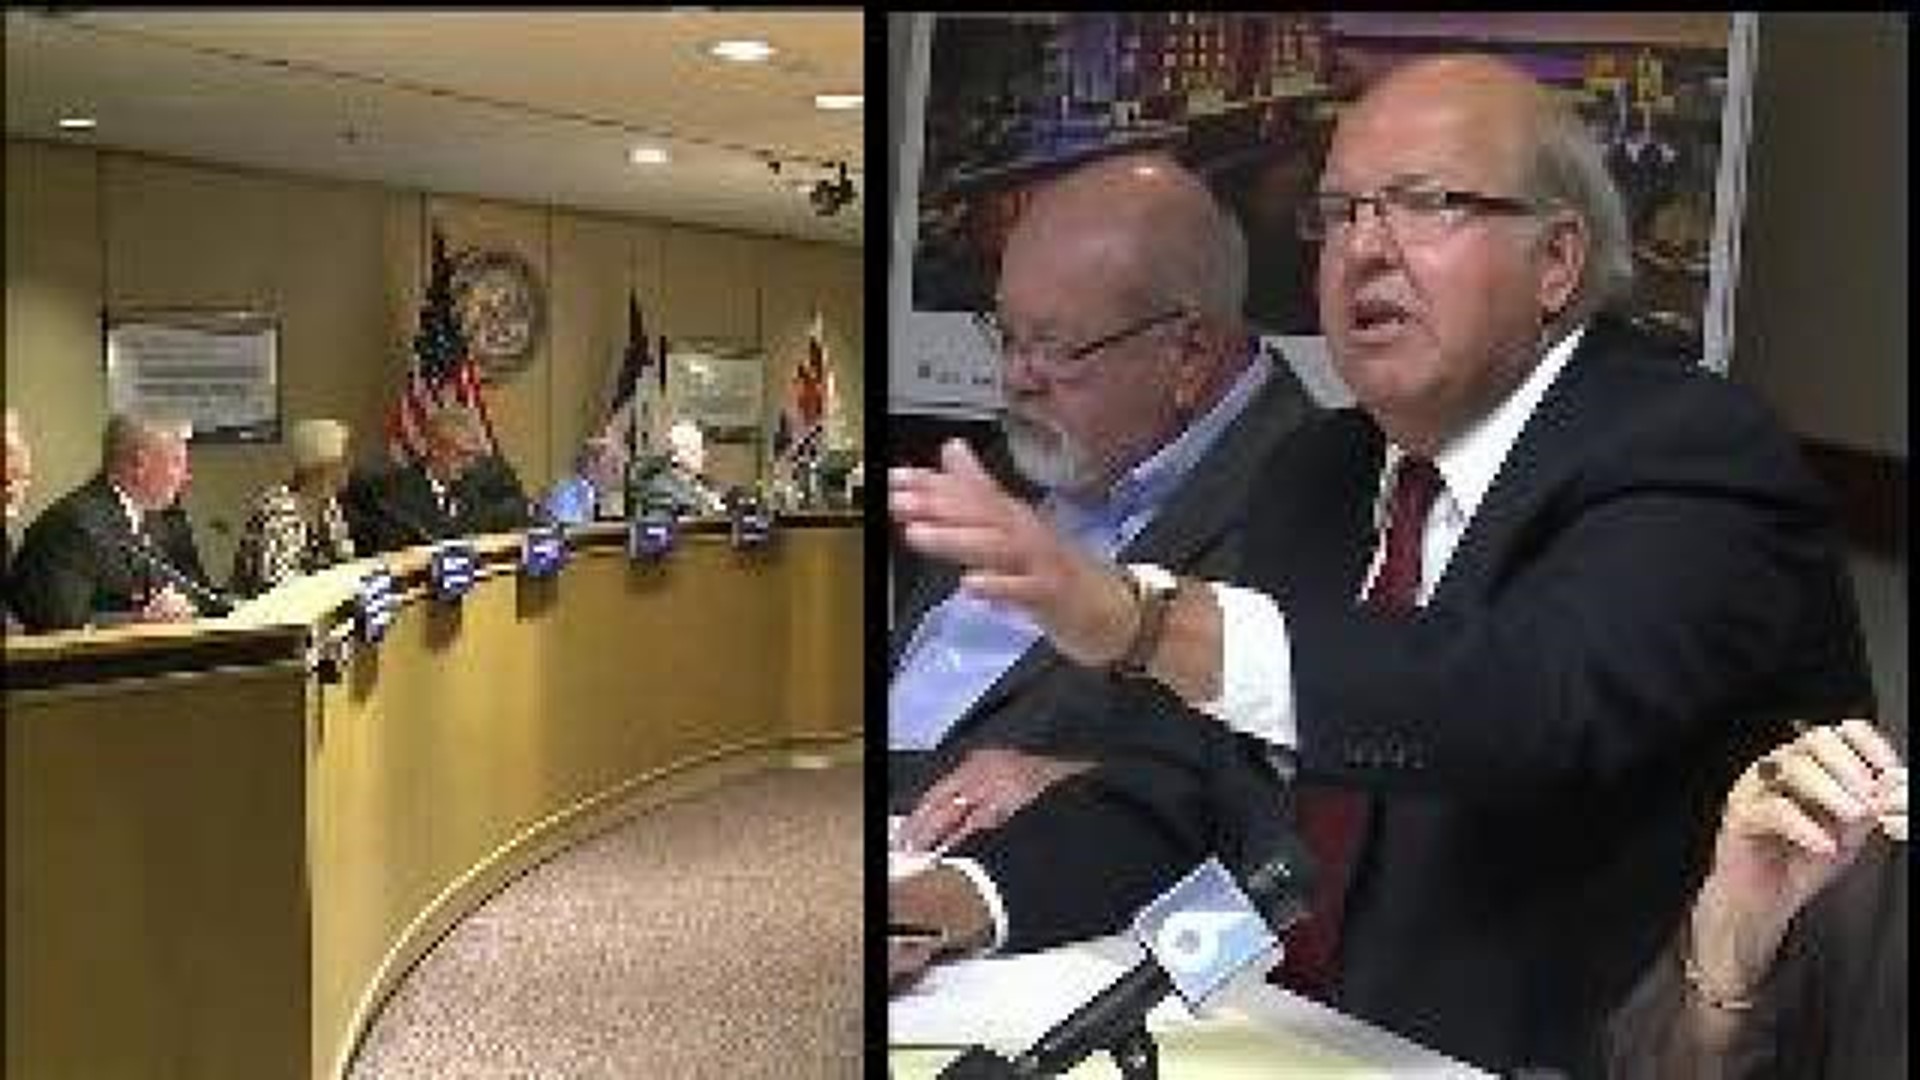 City Split over casino decision